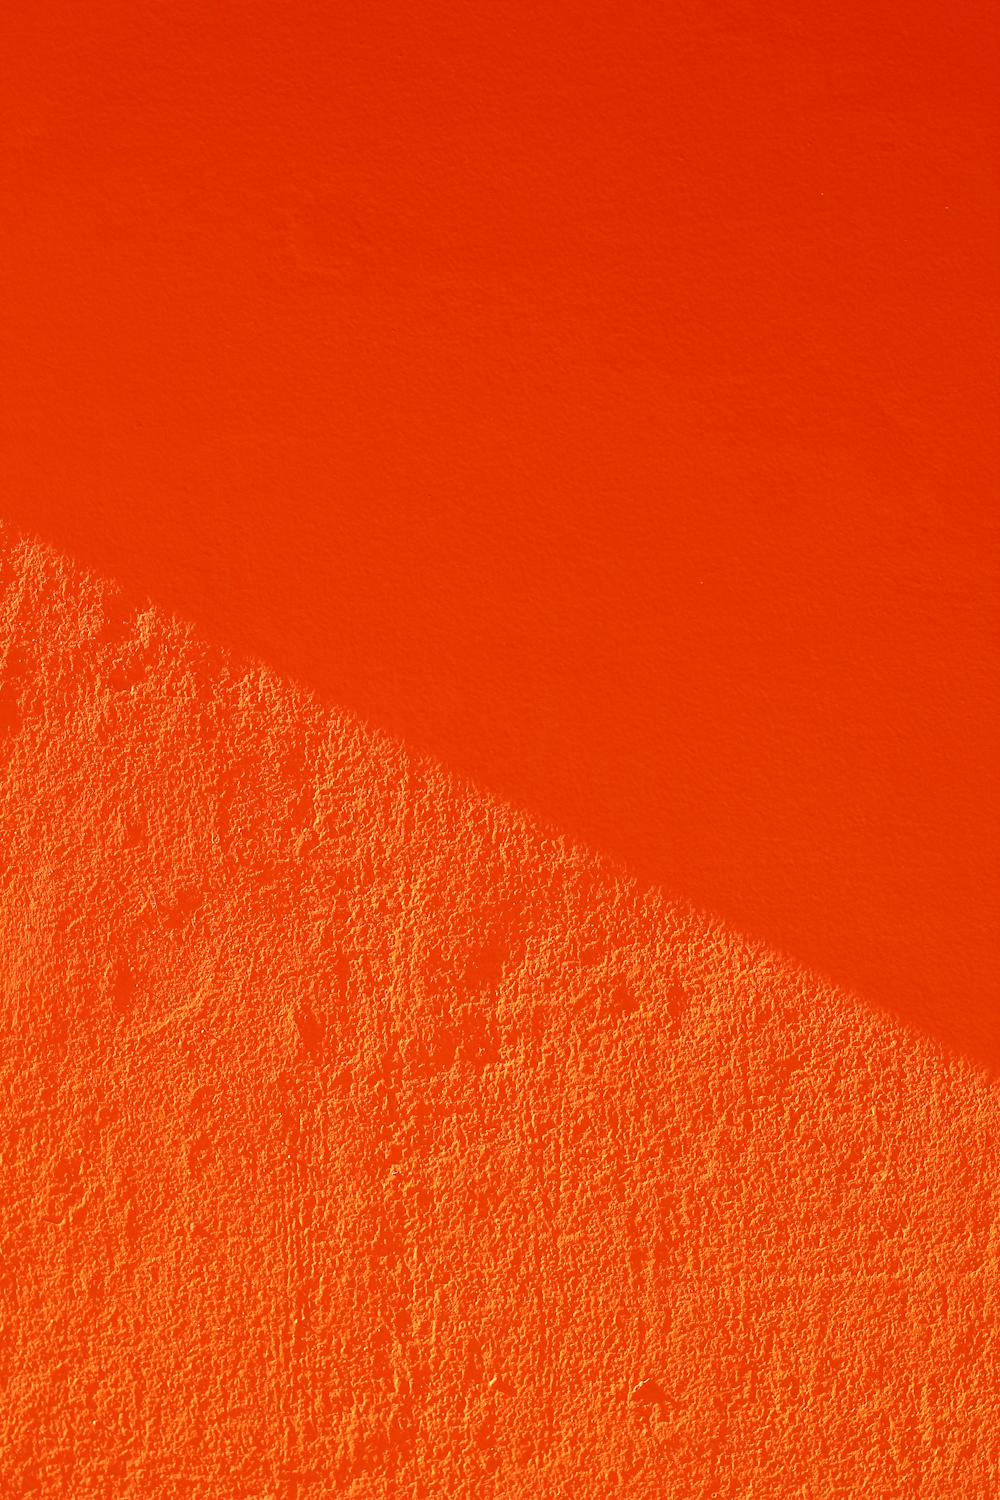 Red Orange Pictures  Download Free Images on Unsplash